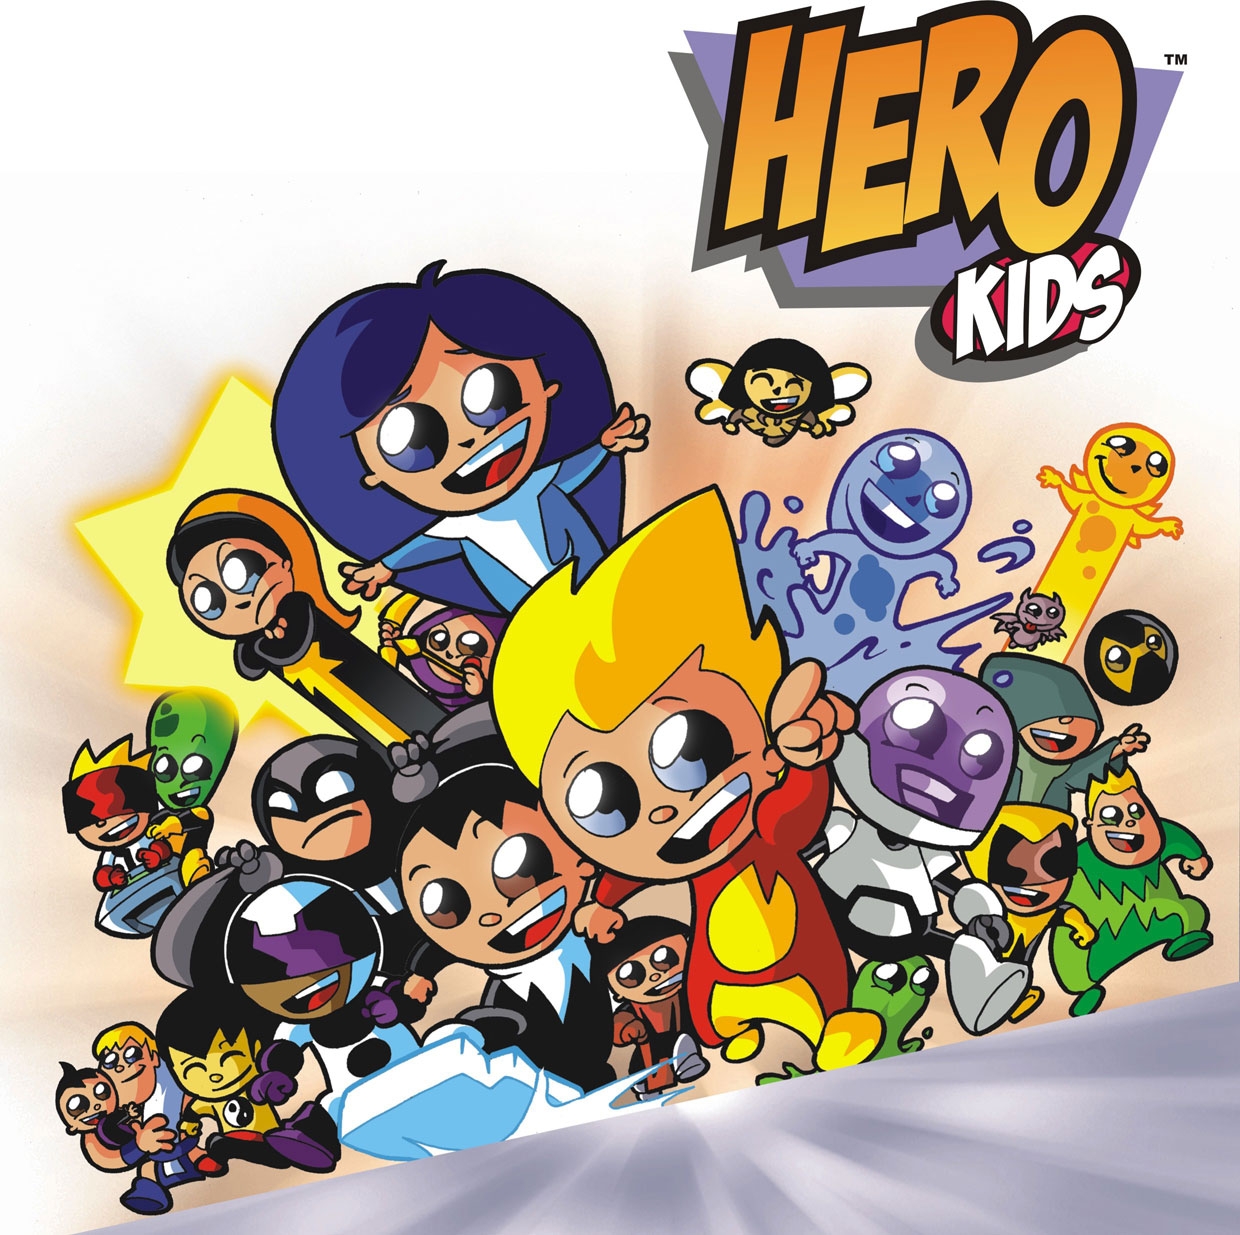 Hero Kids to premiere at the 2005 Cartoon Forum – Animated Views